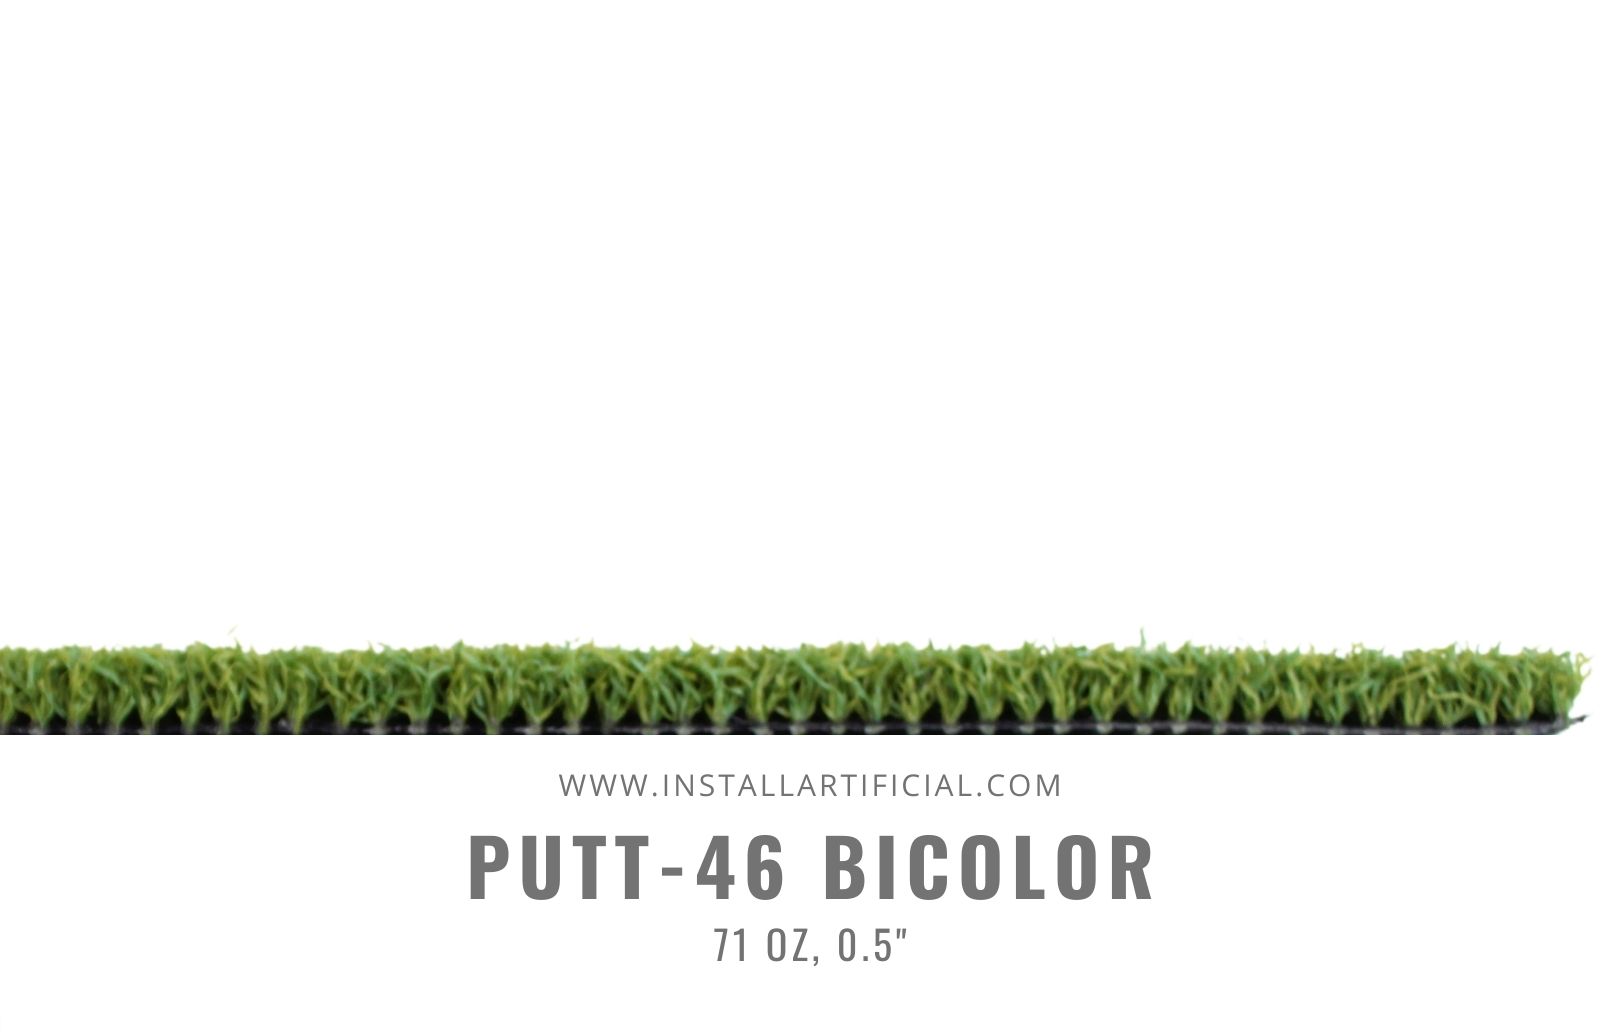 Putt-46-Bicolor, Global Syn Turf, side